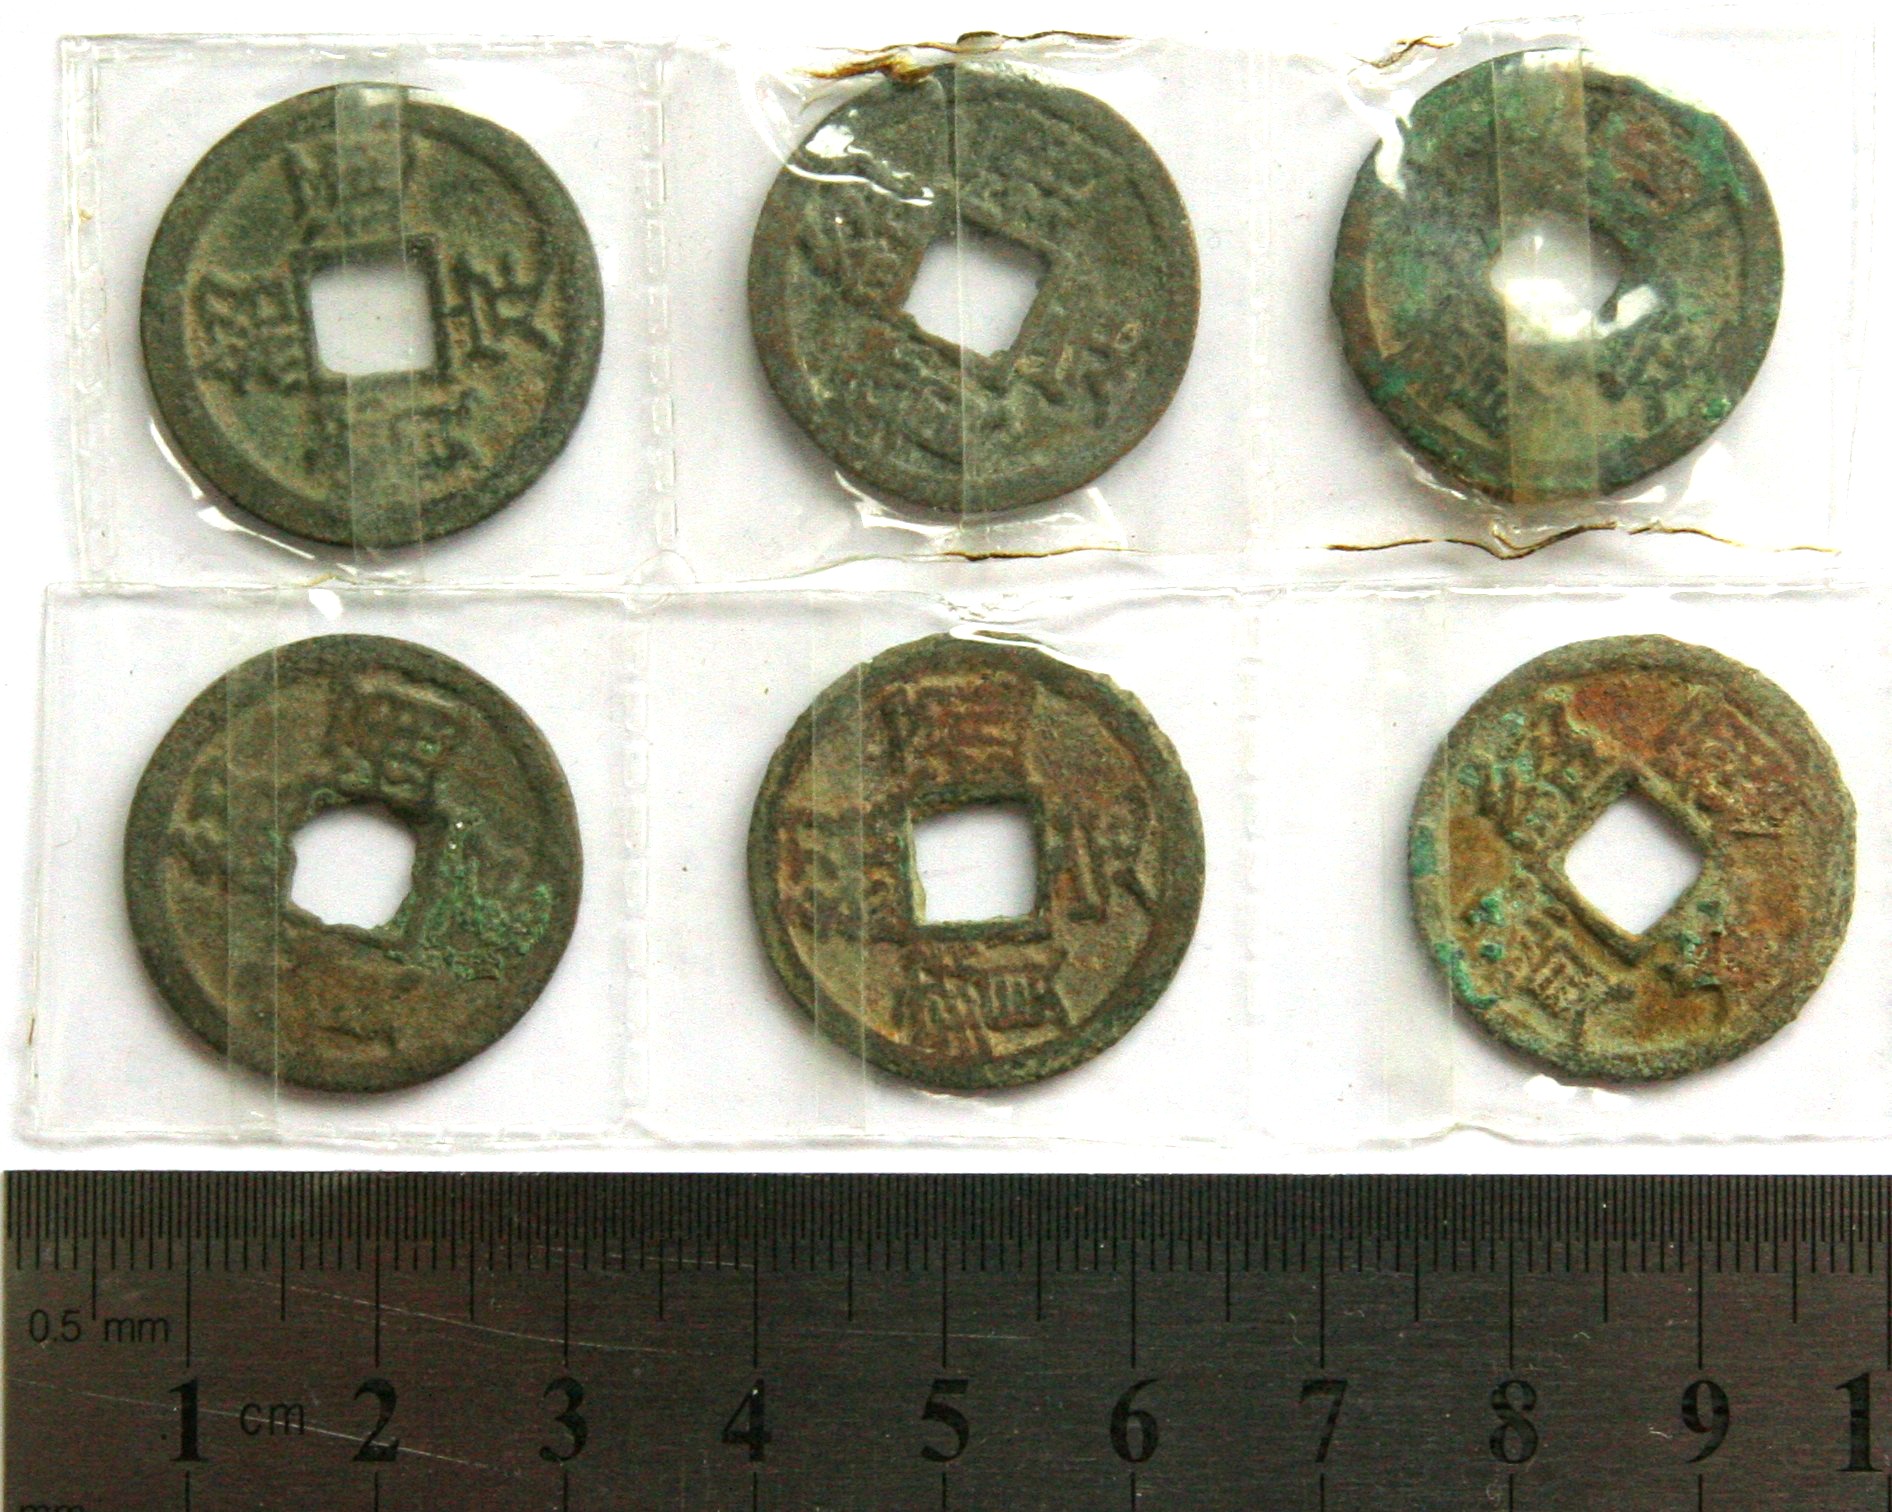 K2965, Shao-Ding Tong-Bao Coin, Full set of Diff 6 Pcs, China AD 1228-1233